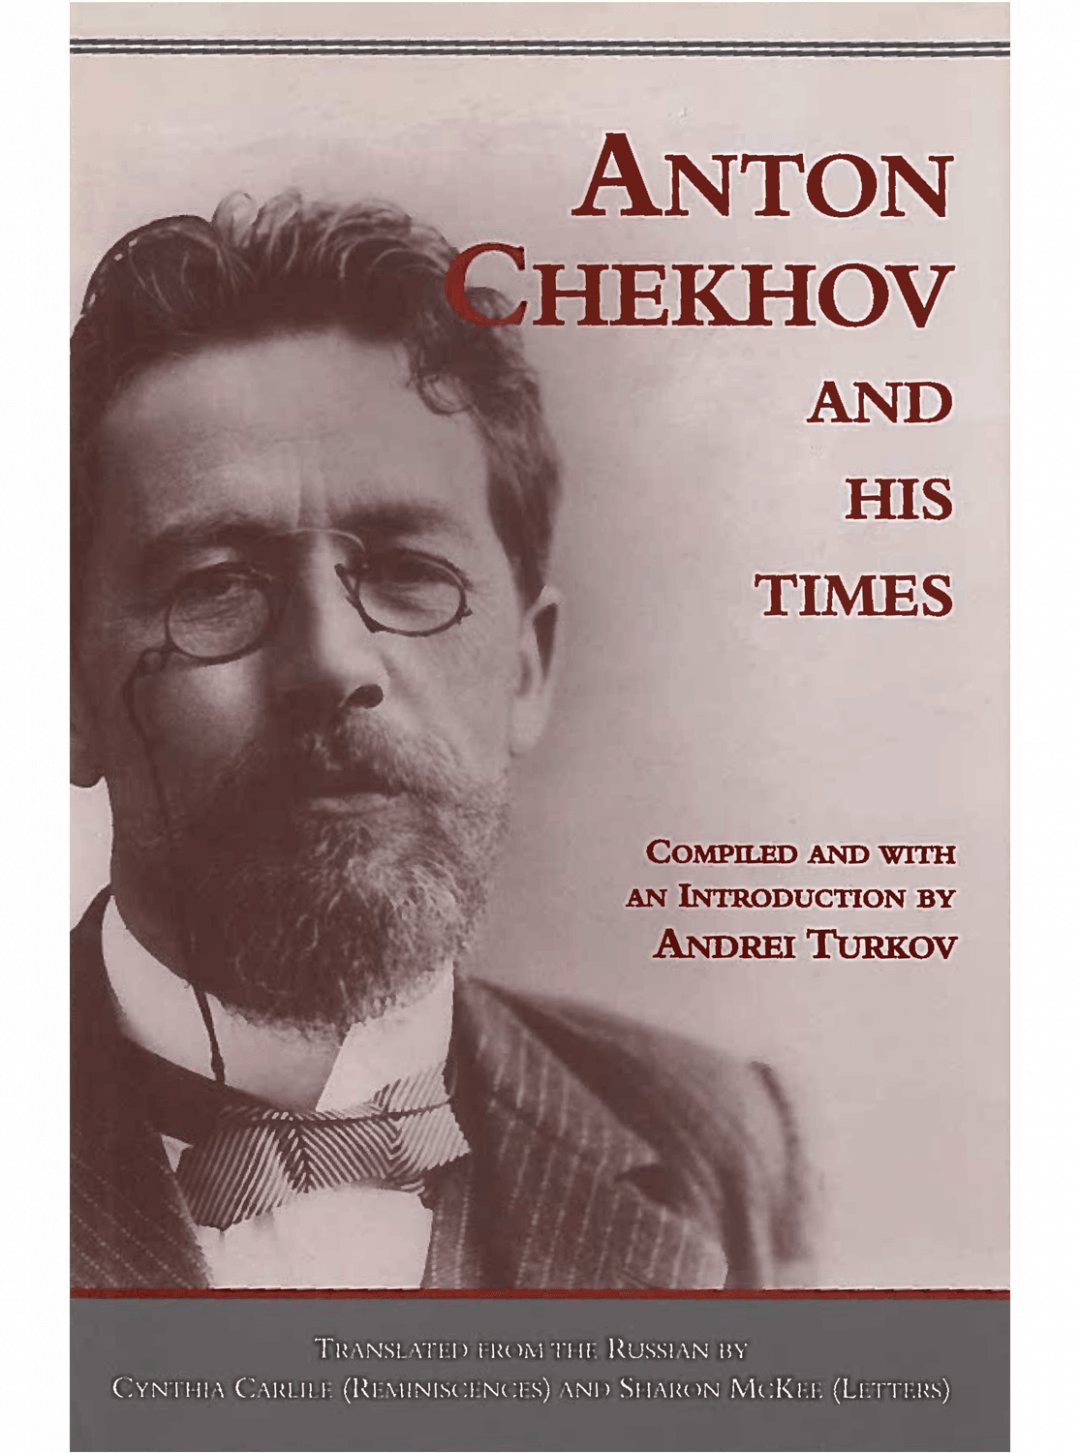 anton chekhov biography in english